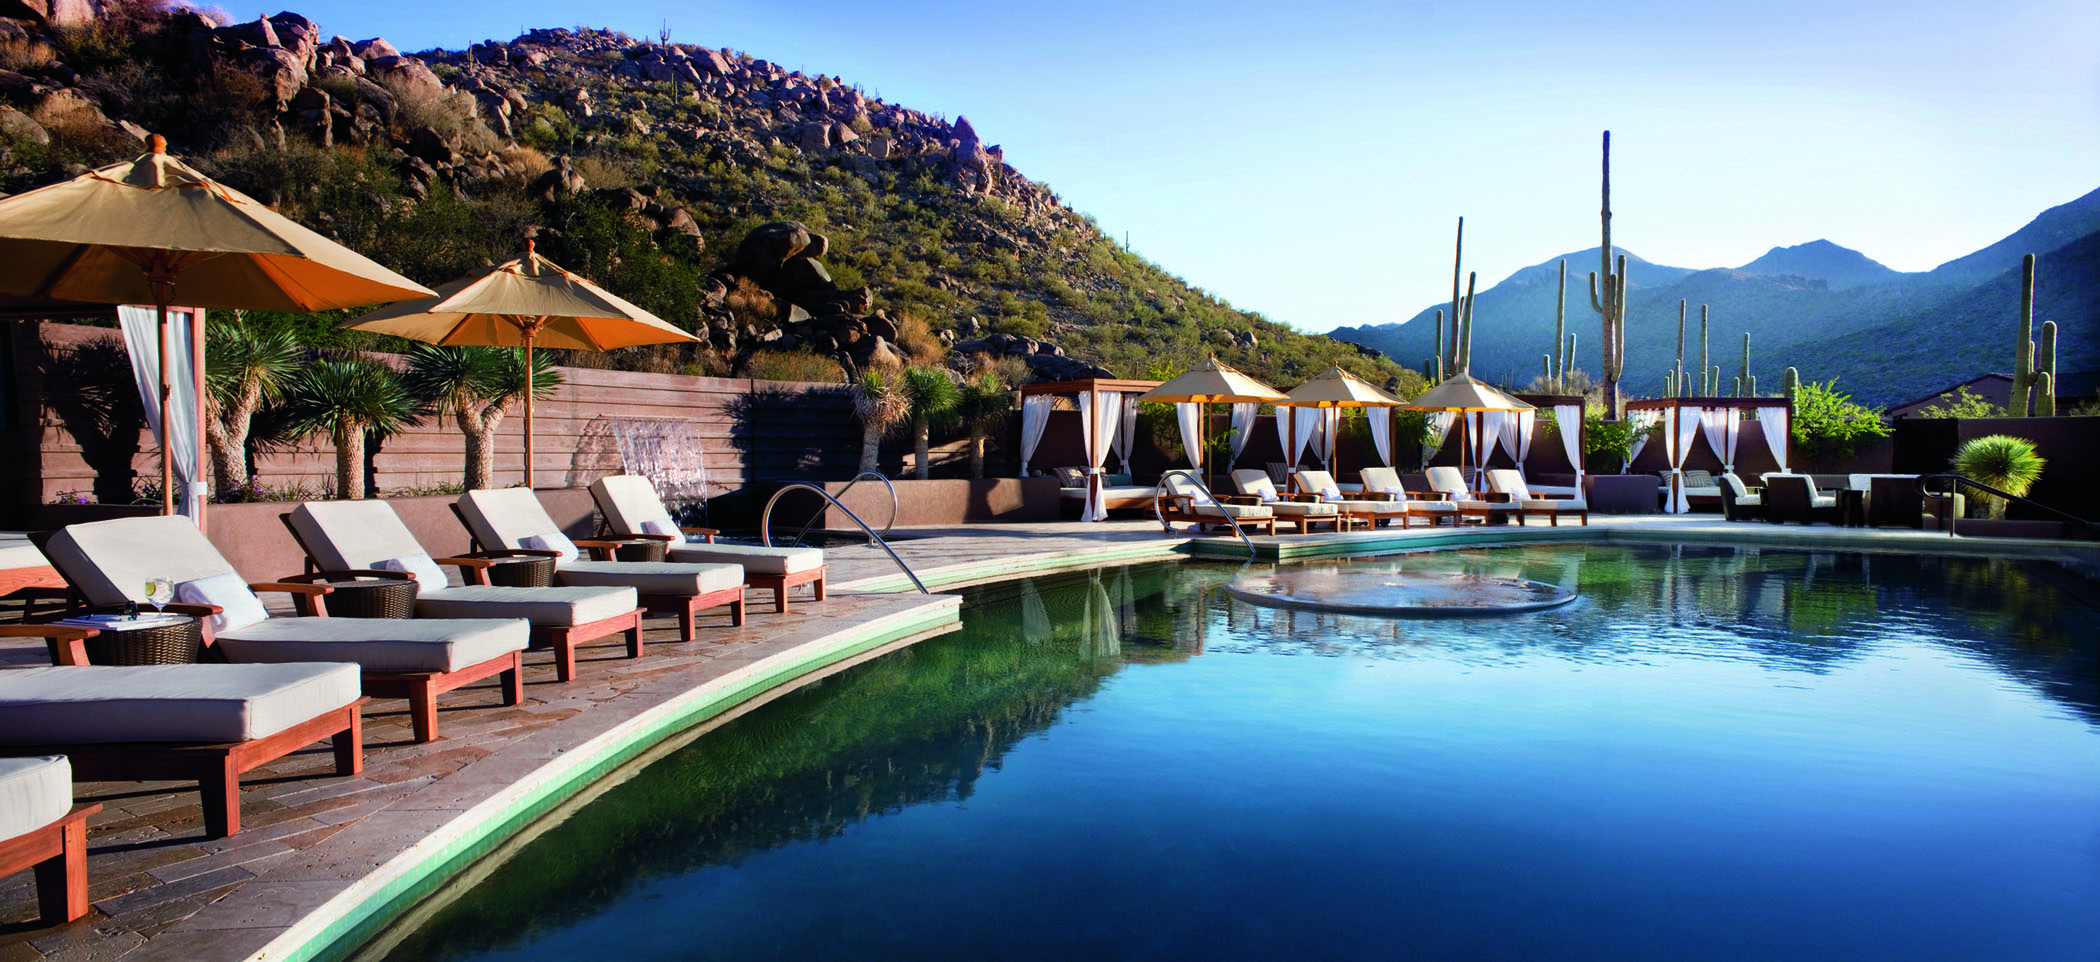 The Ritz-Carlton Dove Mountain Hotel Pool